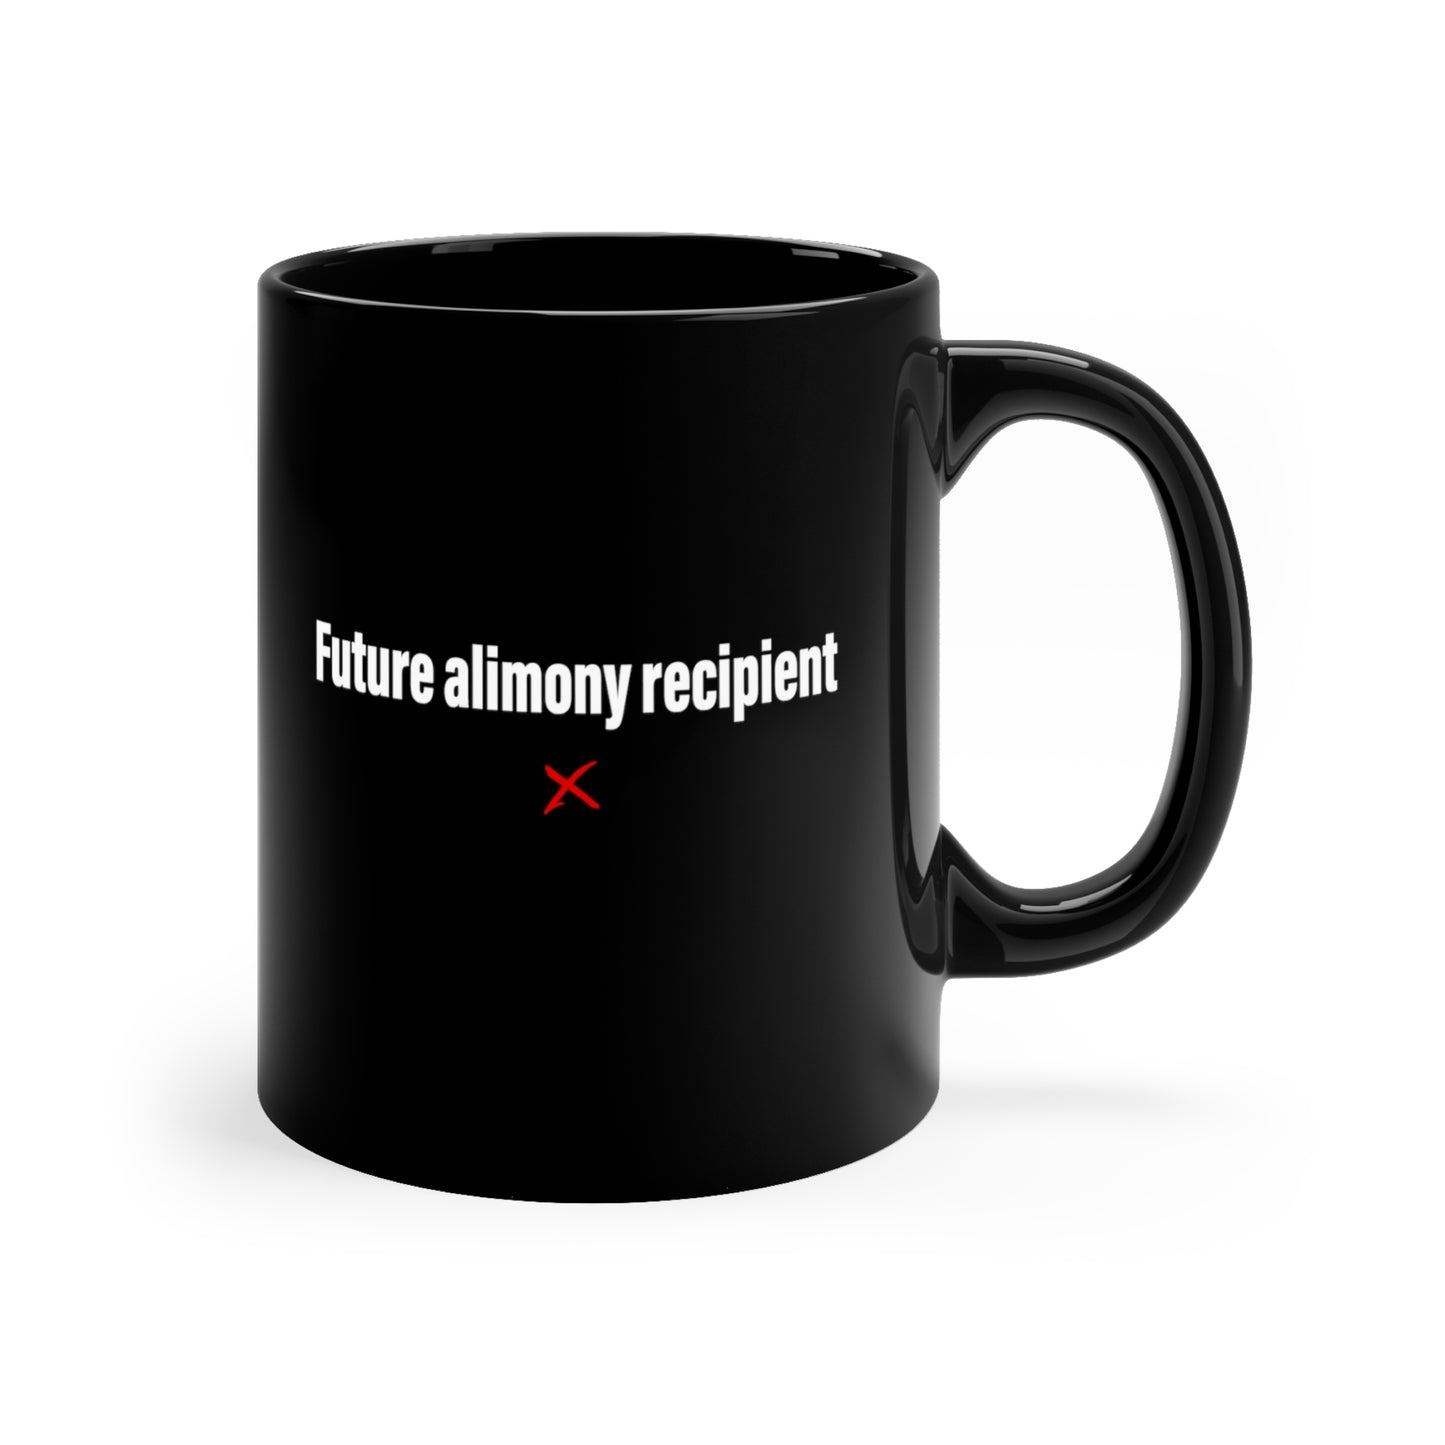 Future alimony recipient - Mug